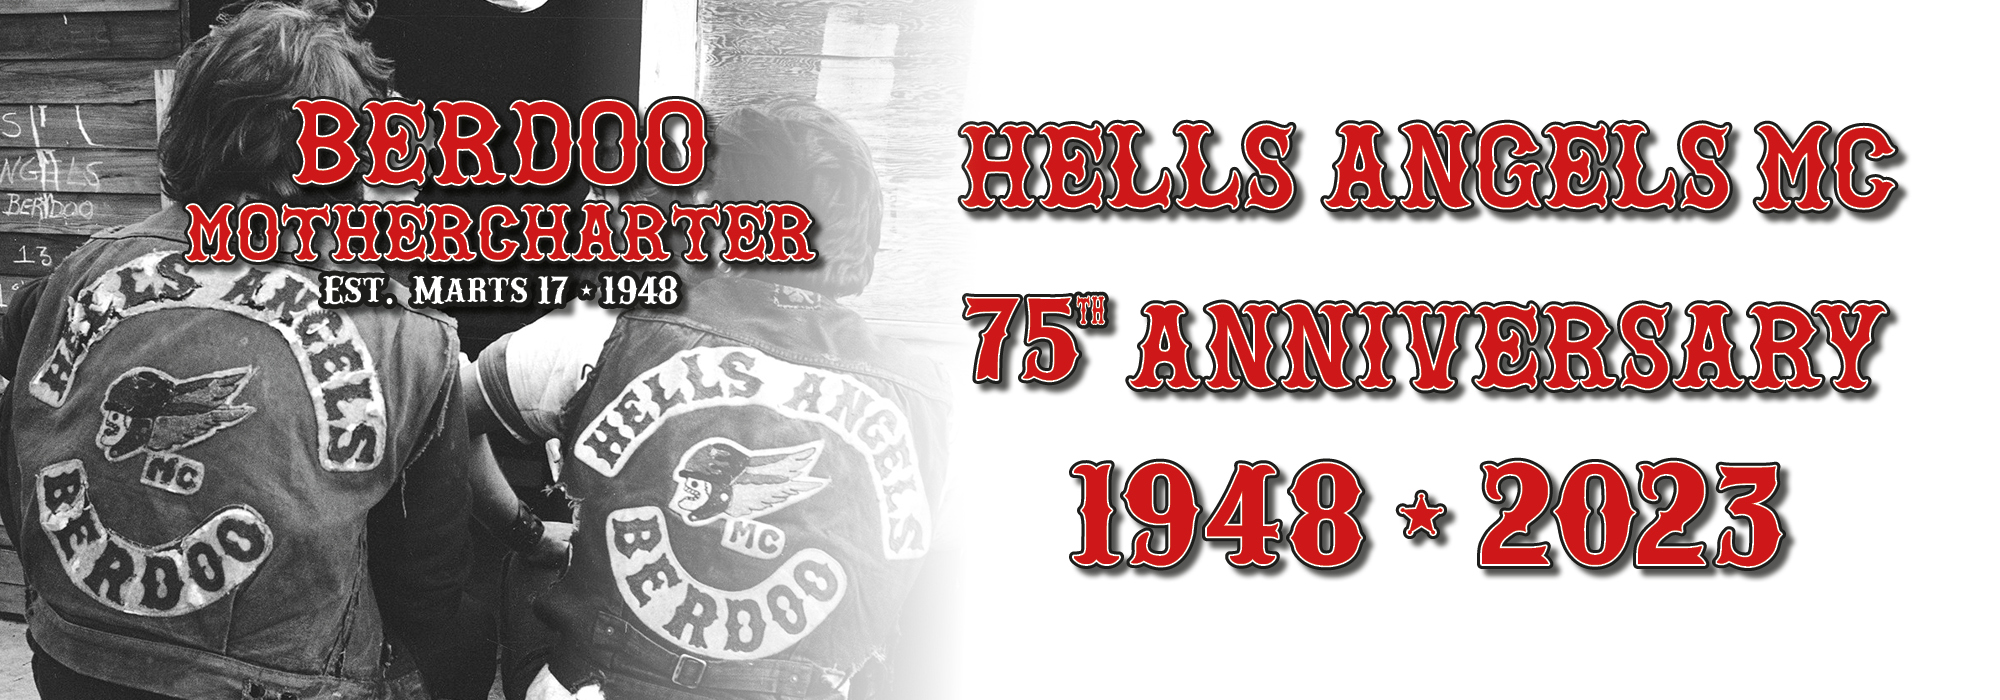 Hells Angels - Wikipedia